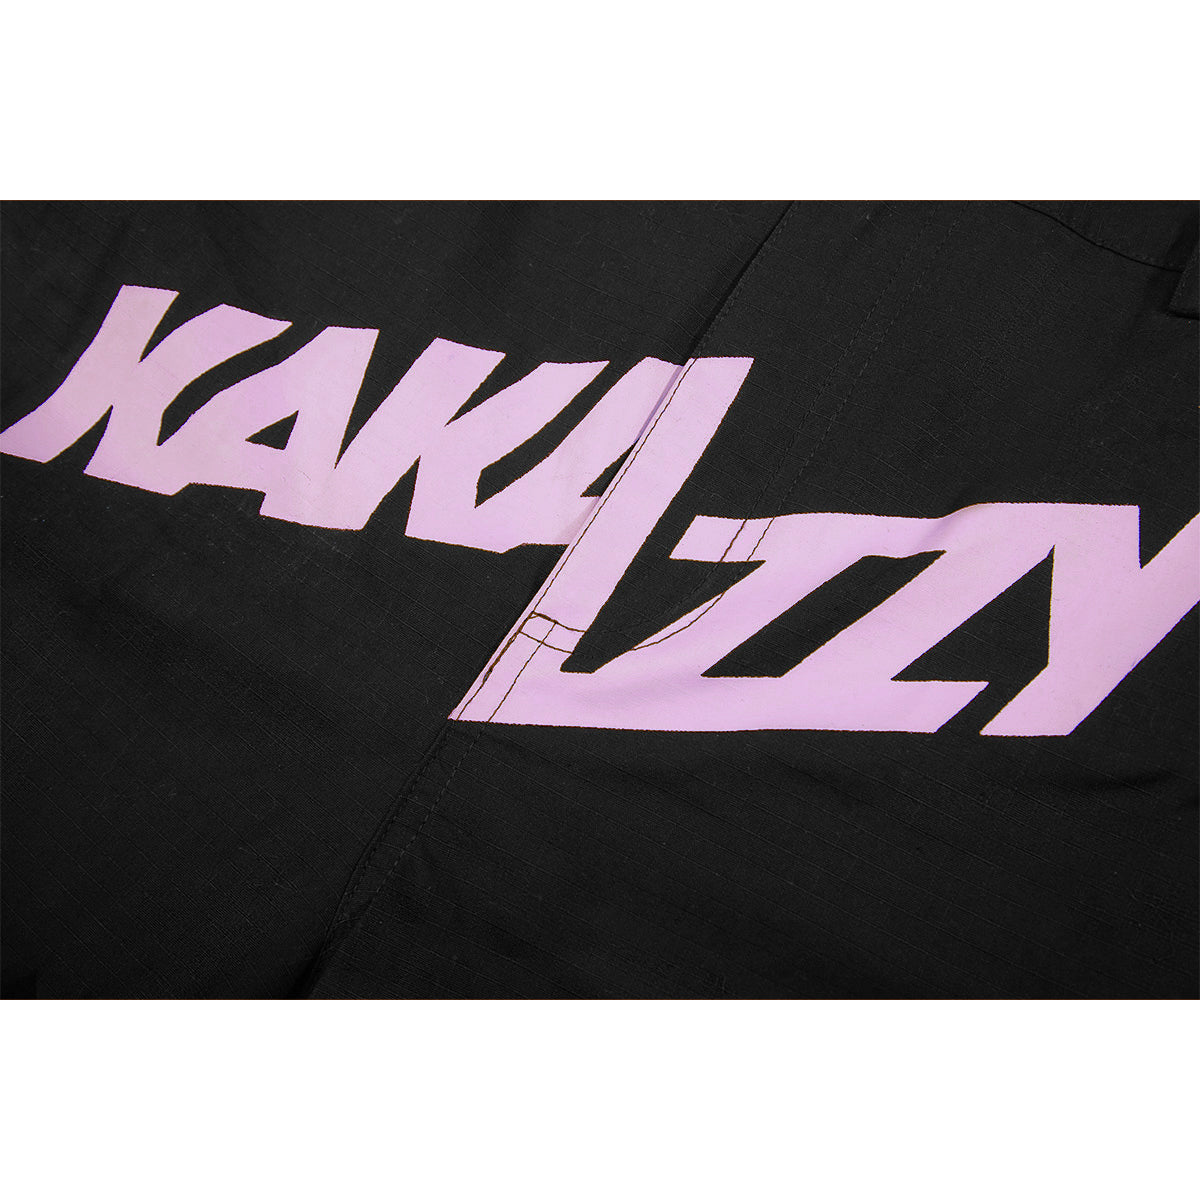 Kakazzy Cargos Black Pink